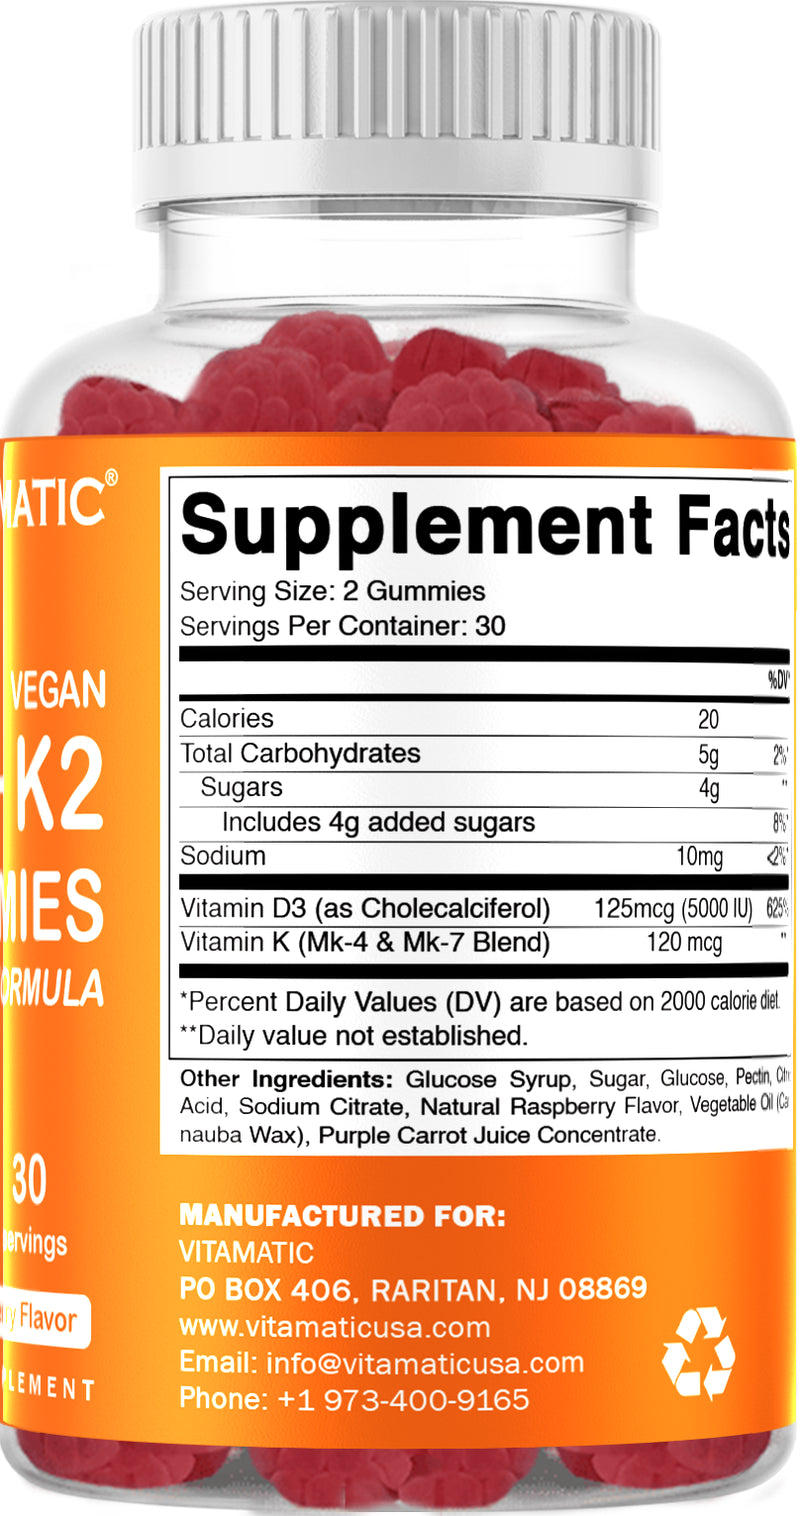 Vitamatic Vitamin D3 K2 Gummies - 60 Count - Supports Healthy Bone, Heart & Calcium Absorption, & Immune Health - Plant Based, Non-Gmo, Gluten Free